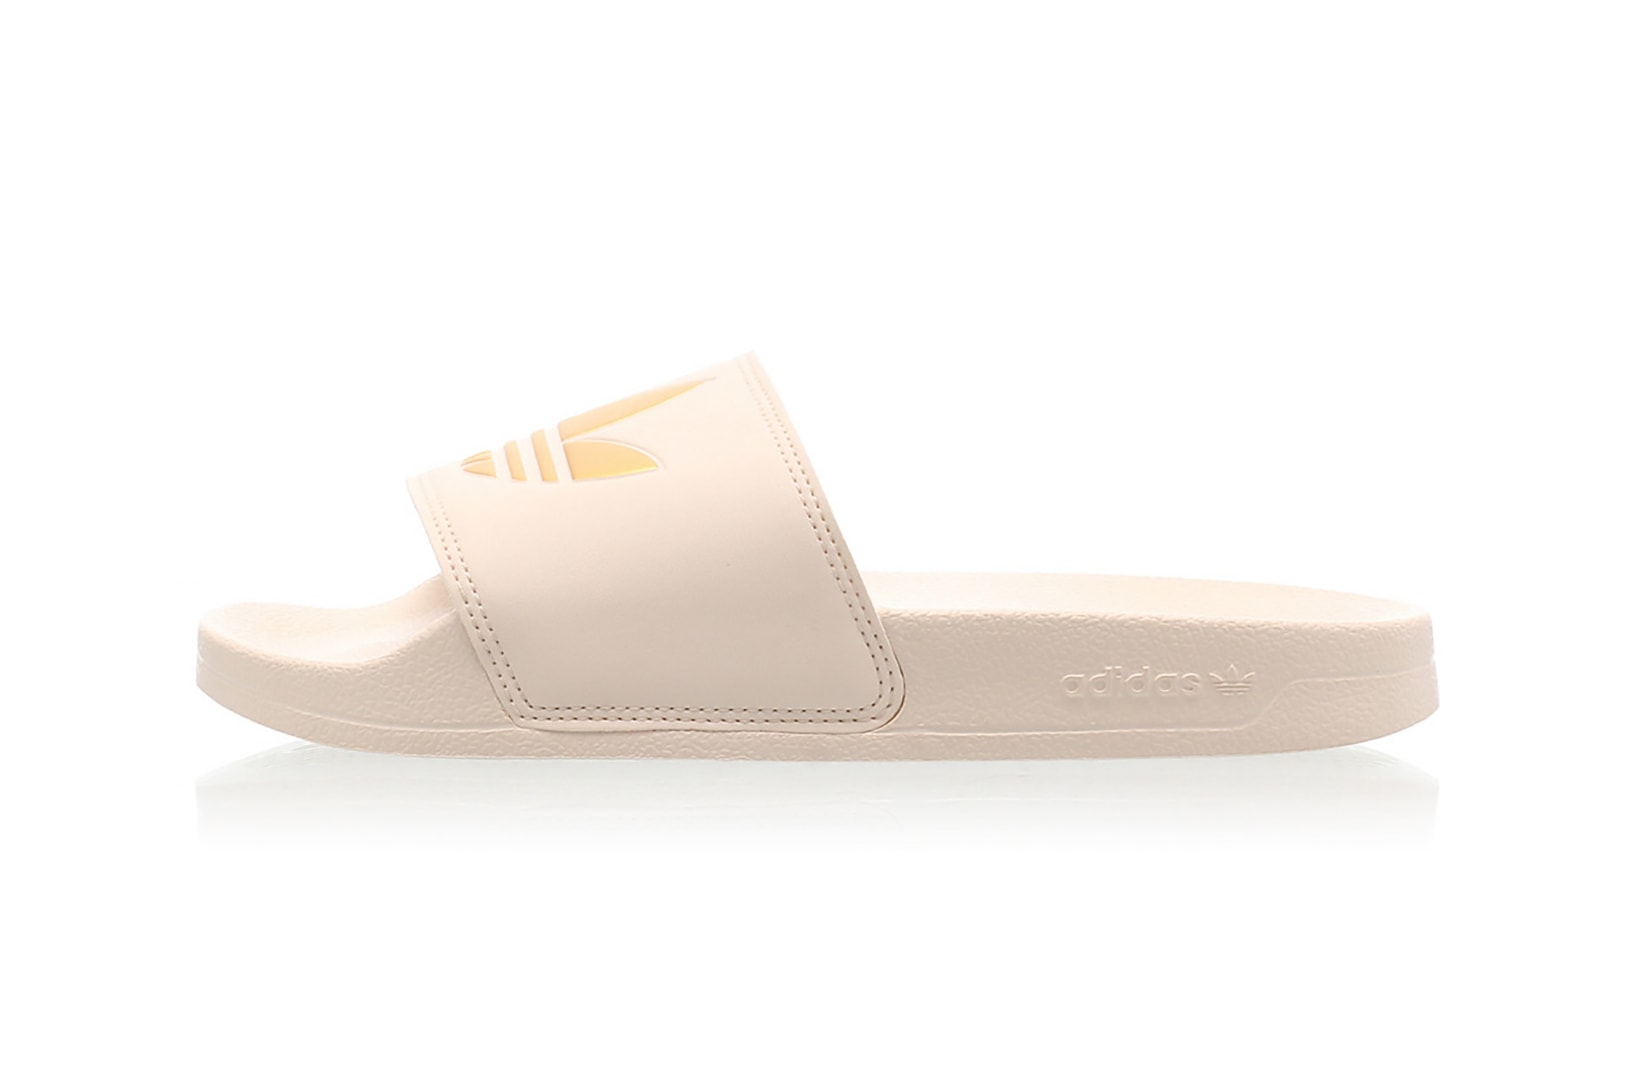 adidas adilette lite slides slippers pink cream white gray footwear